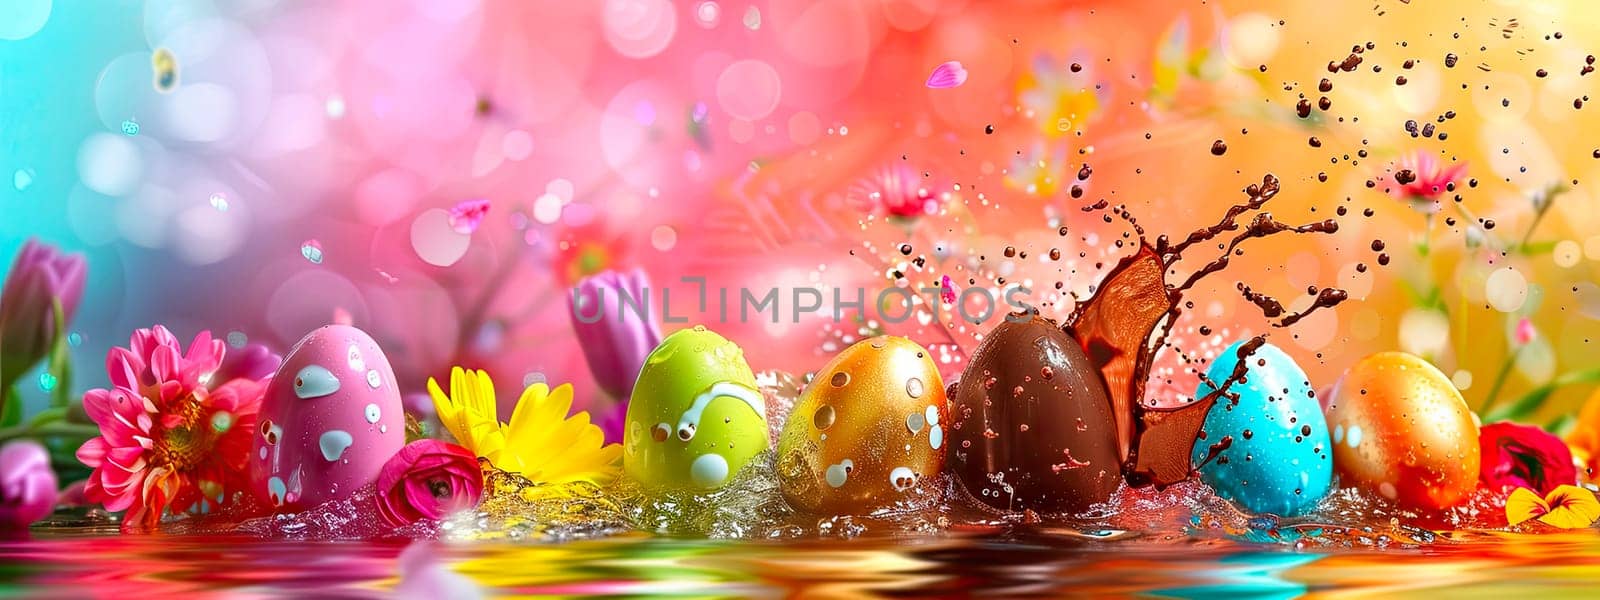 chocolate easter egg splash. Selective focus. by yanadjana